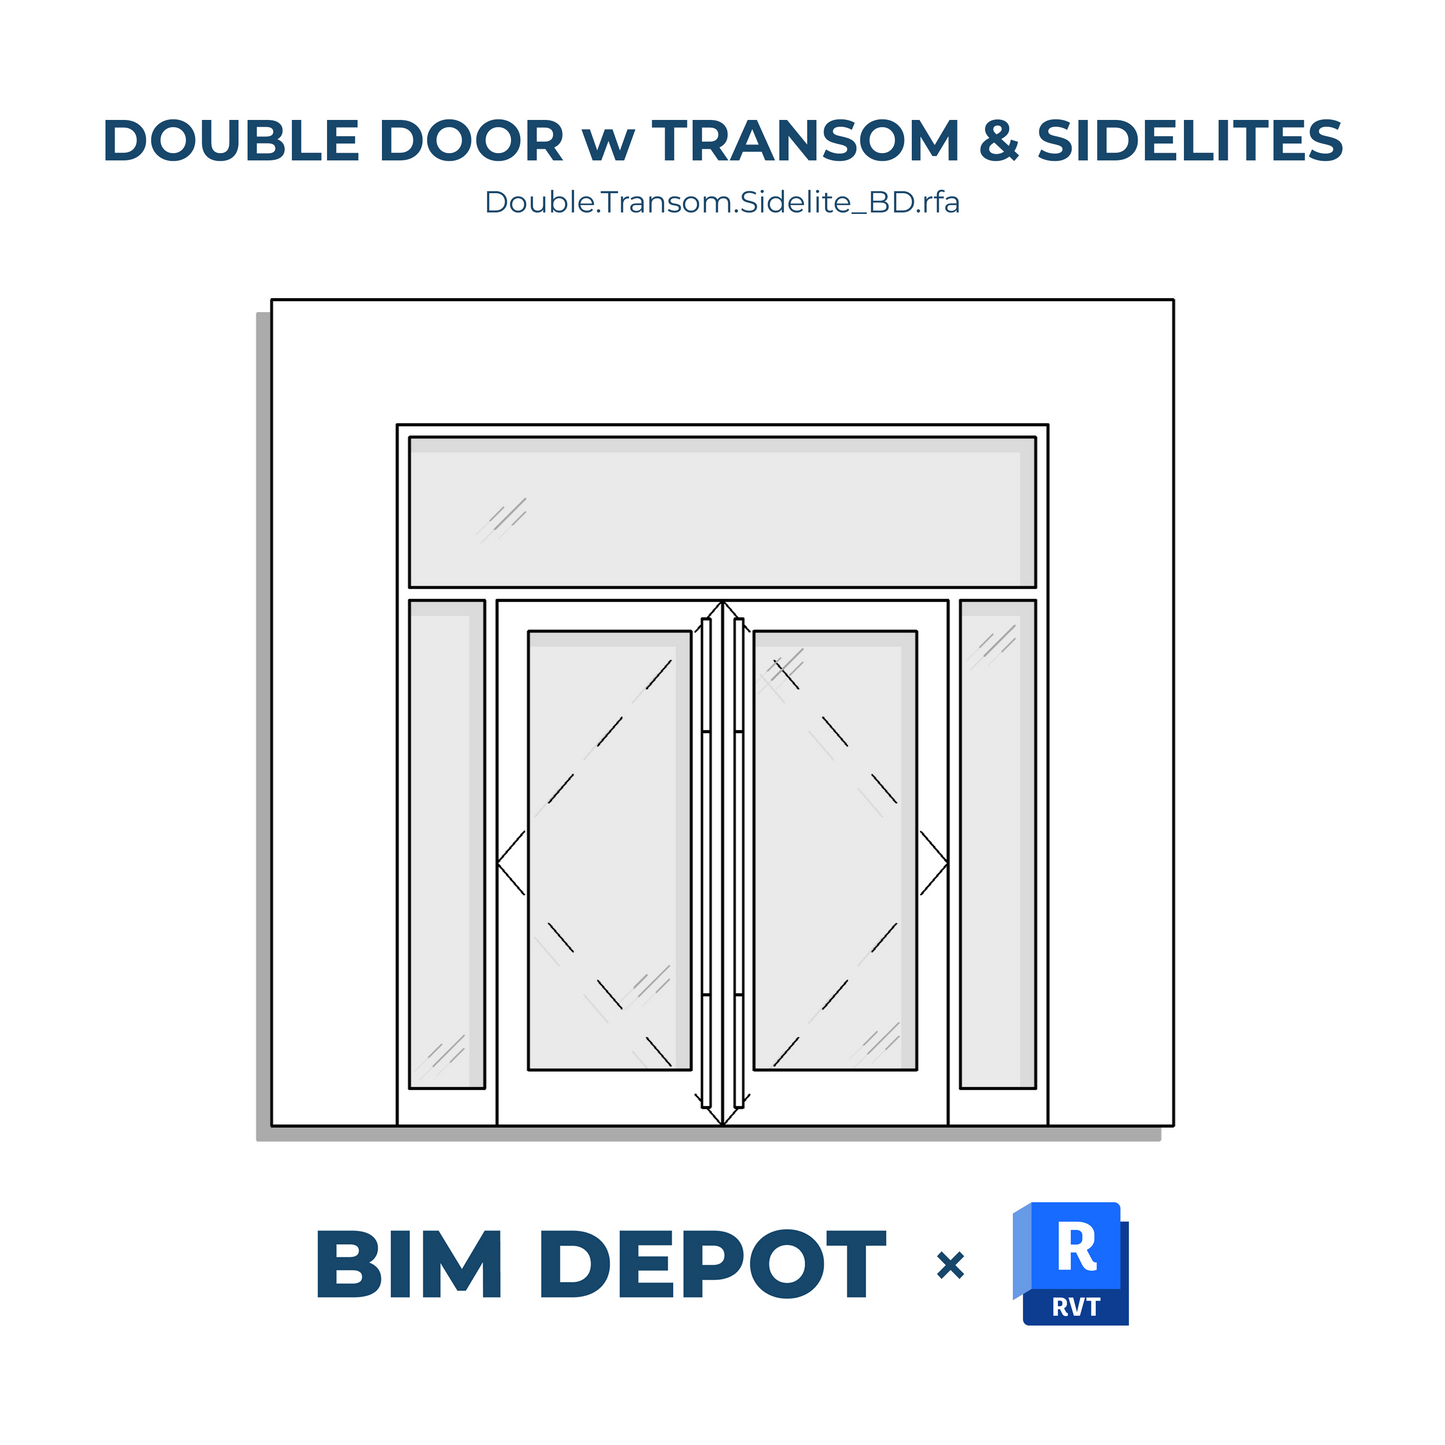 Double Door with Transom & Sidelites